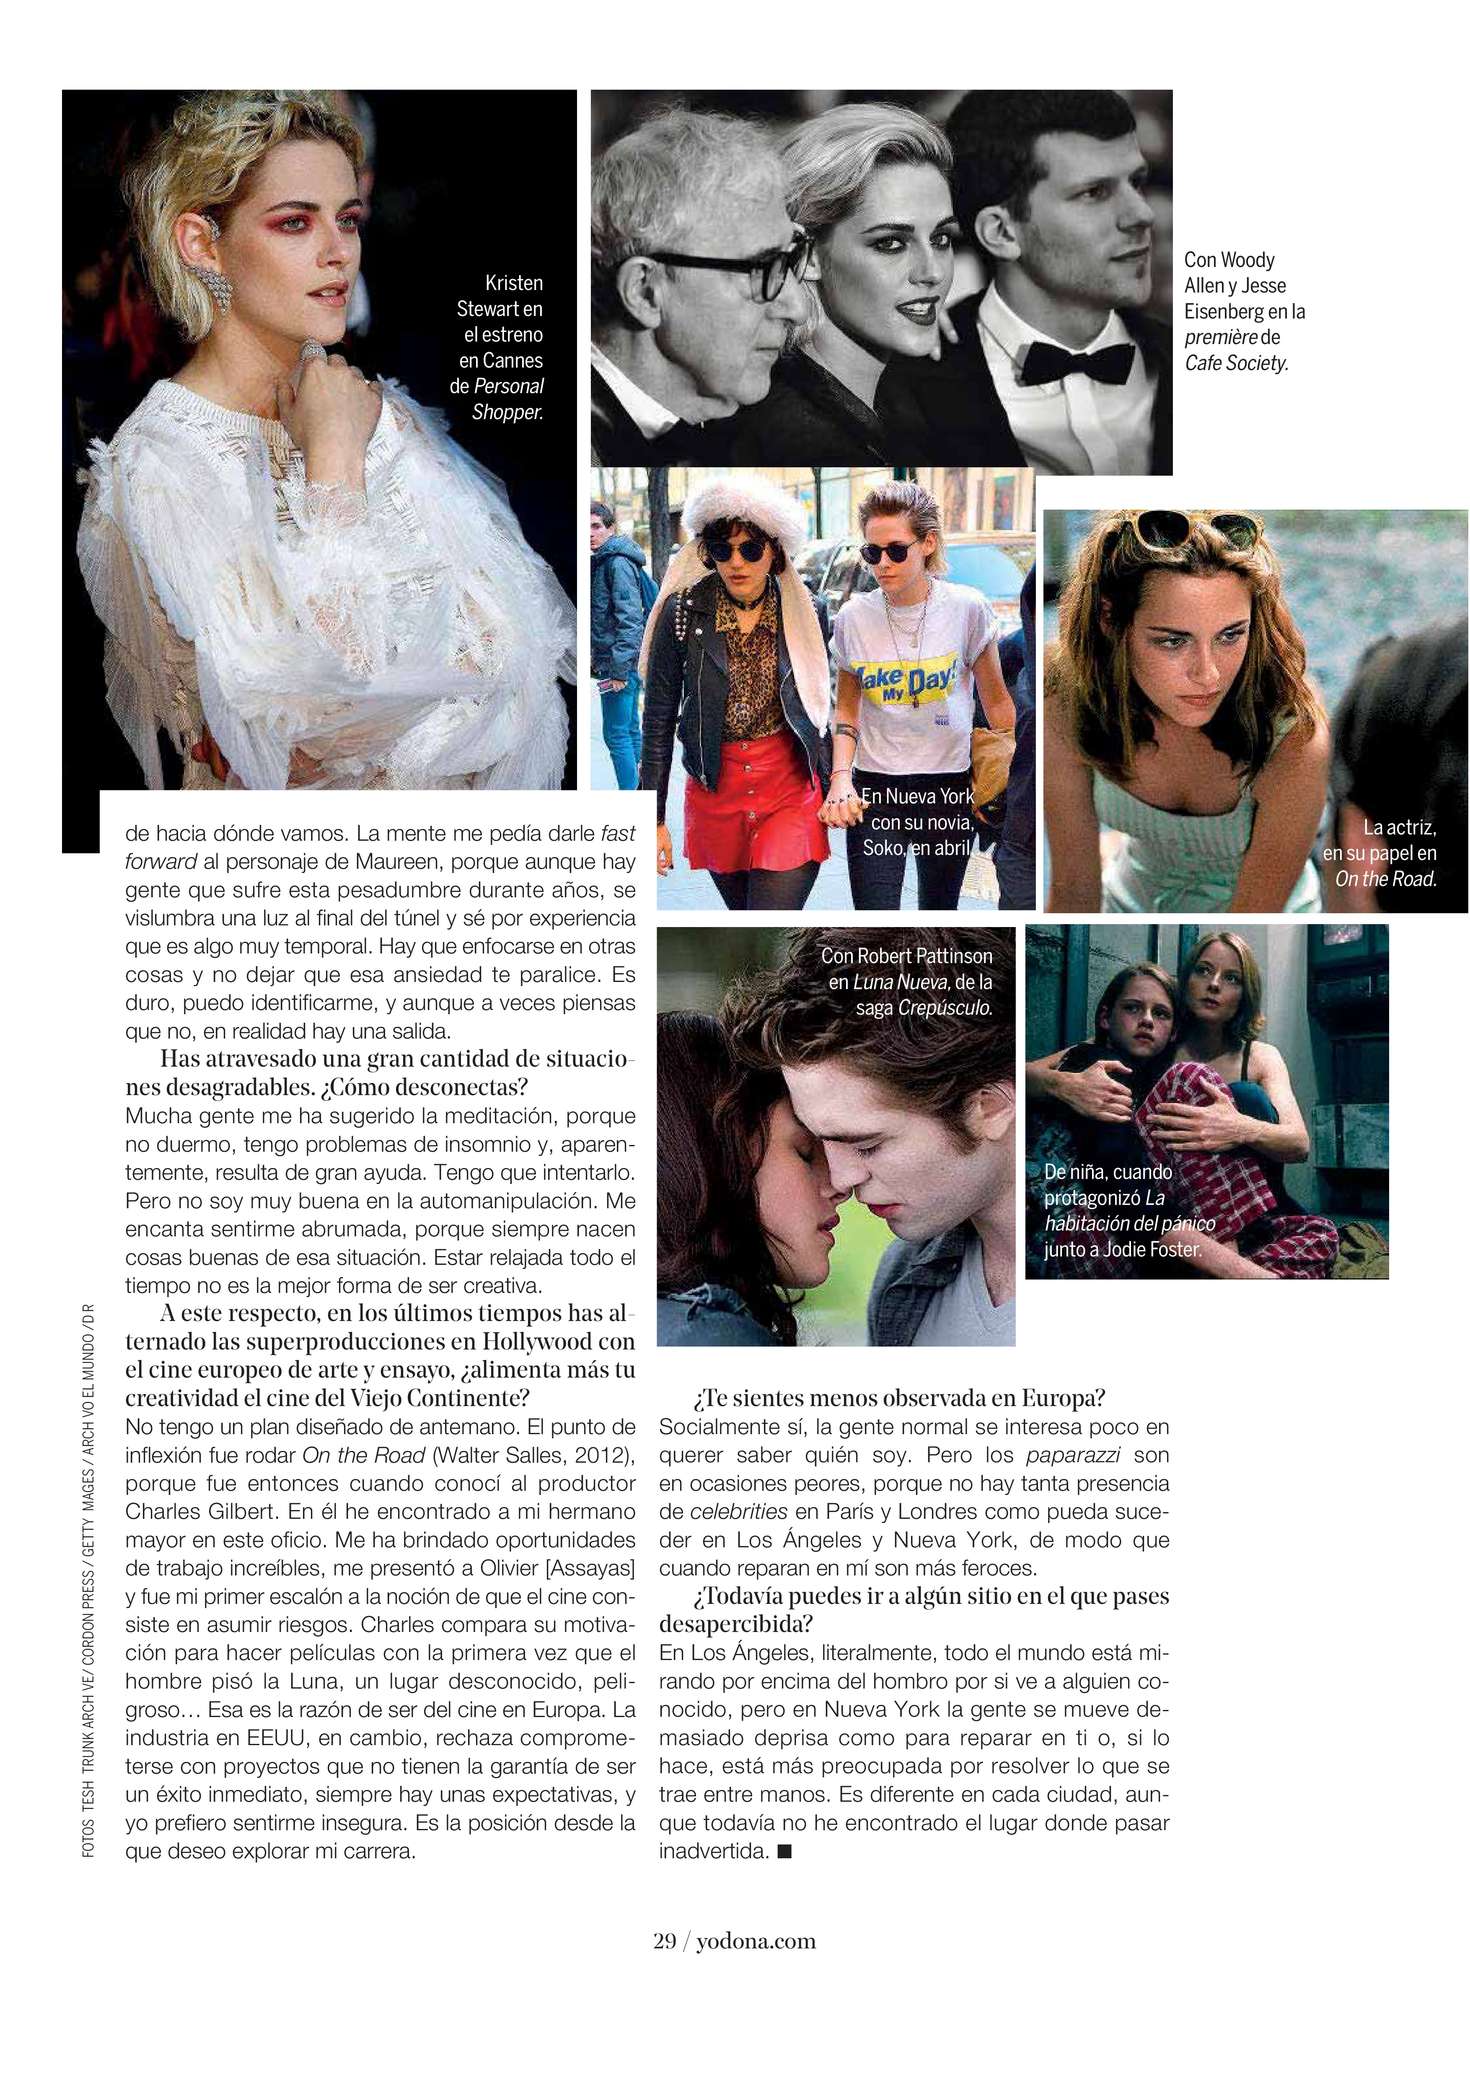 Kristen Stewart â€“ YO Dona Magazine (June 2016)